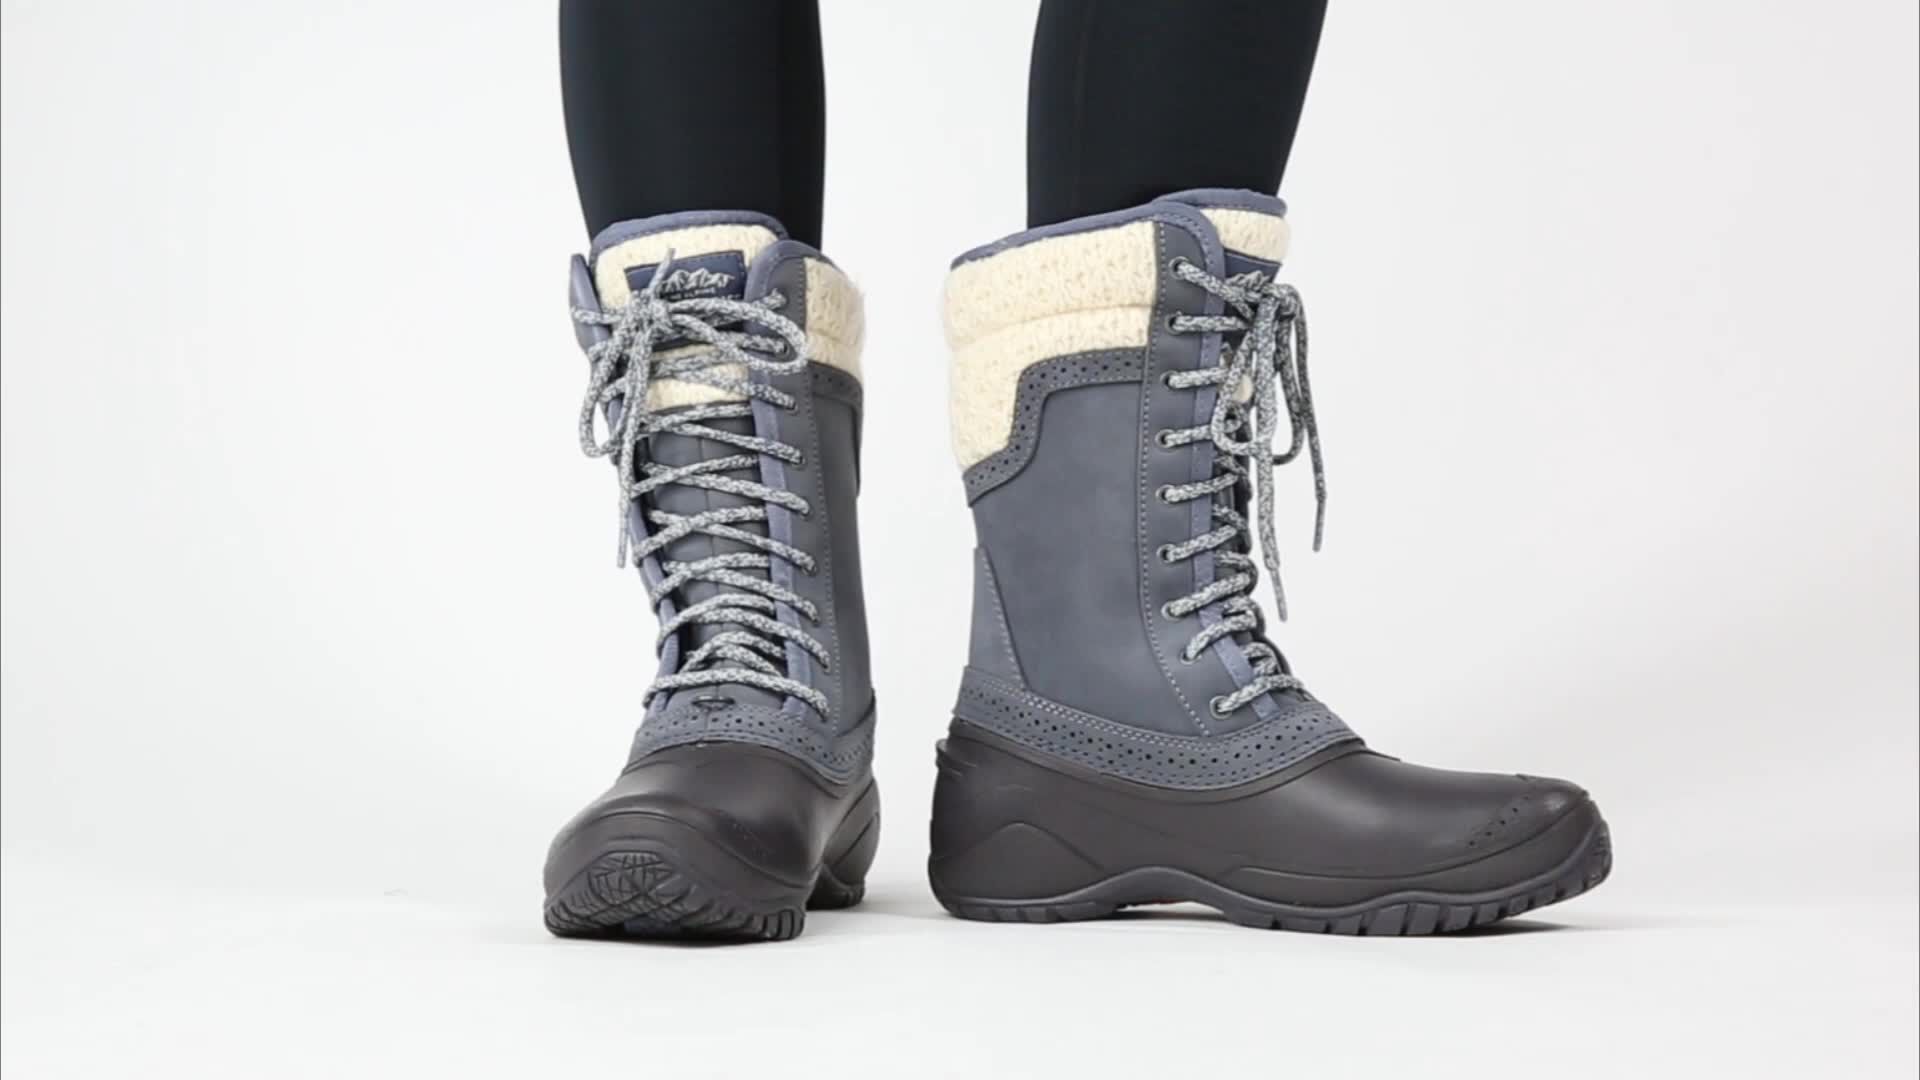 north face women's shellista winter boots